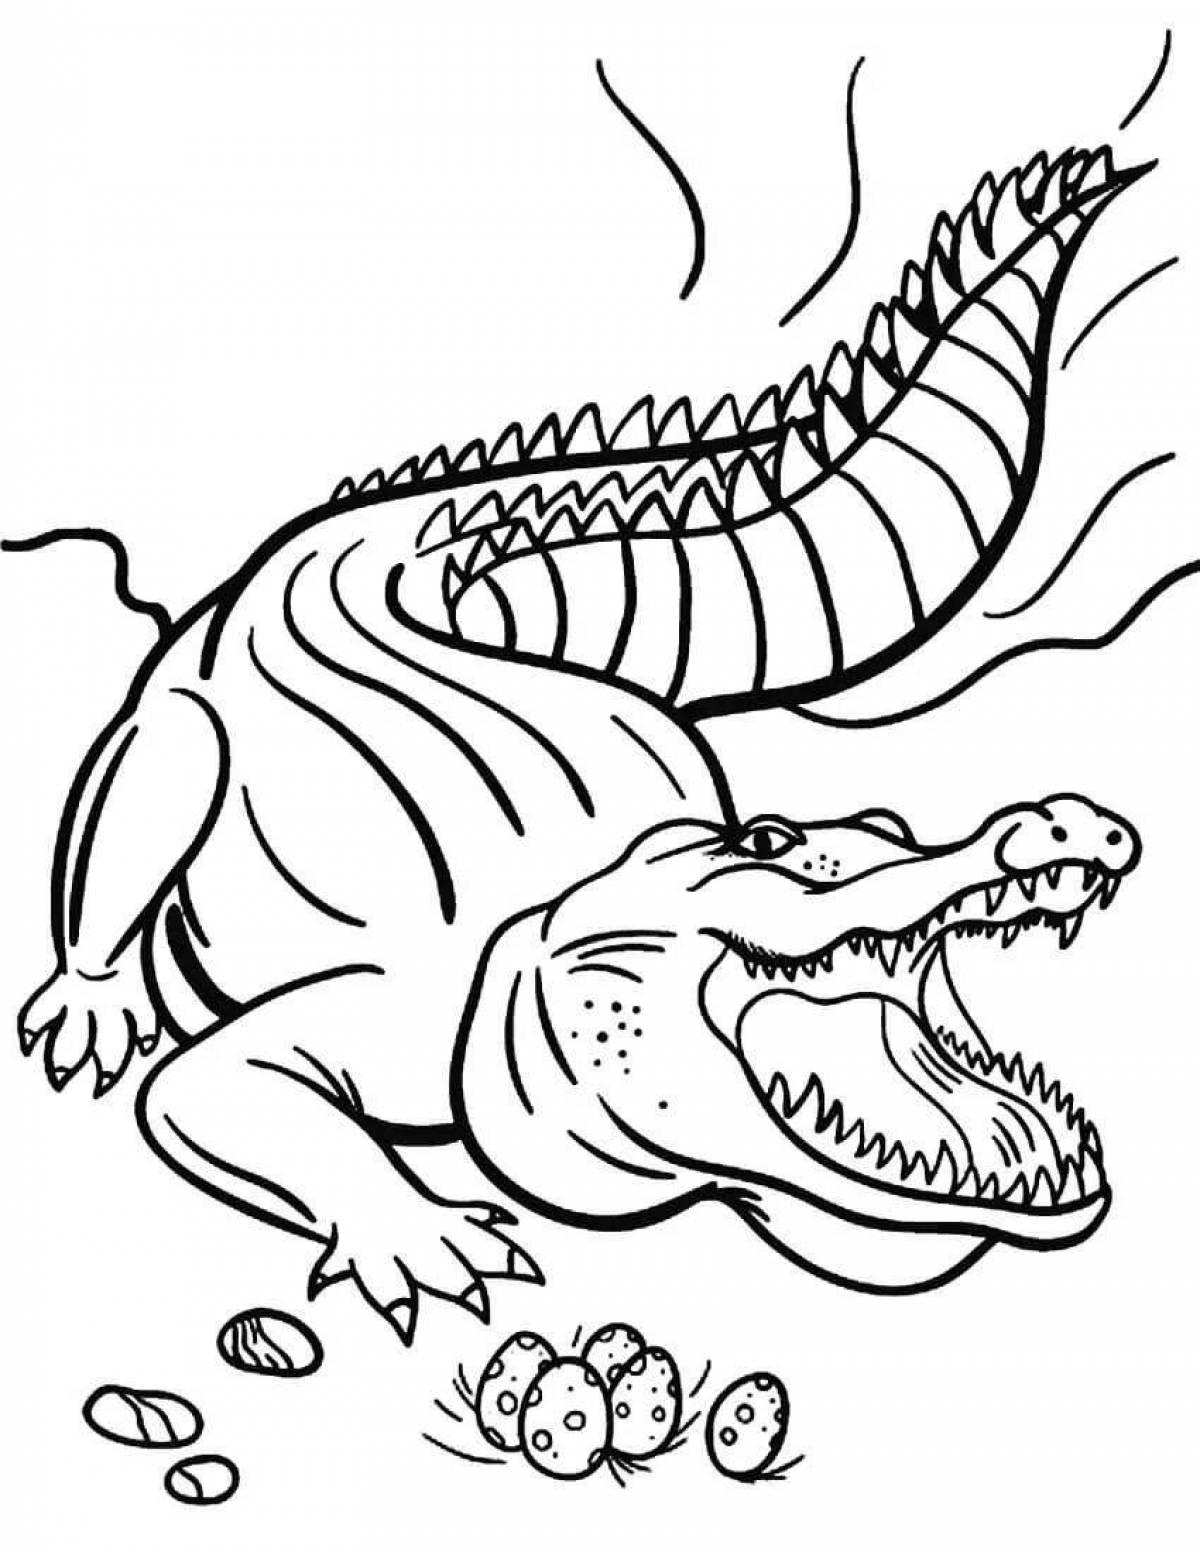 Crocodile drawing for kids #6